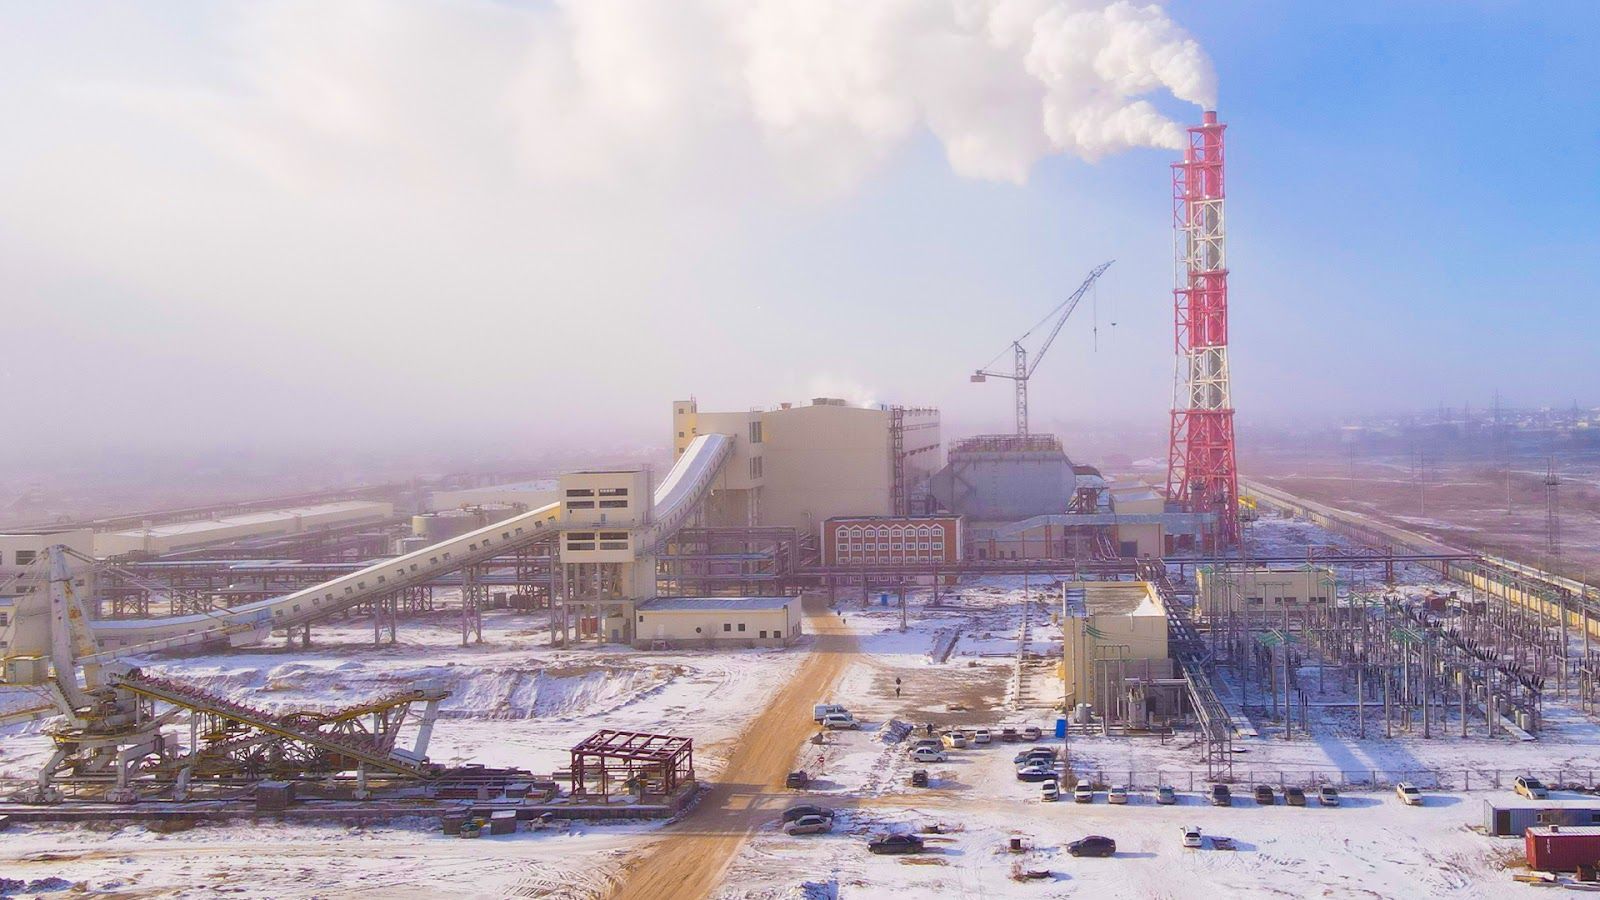 За 5 лет лет в Казахстане планируют ввести электроэнергетические мощности на 14 гигаватт 2656558 — Kapital.kz 